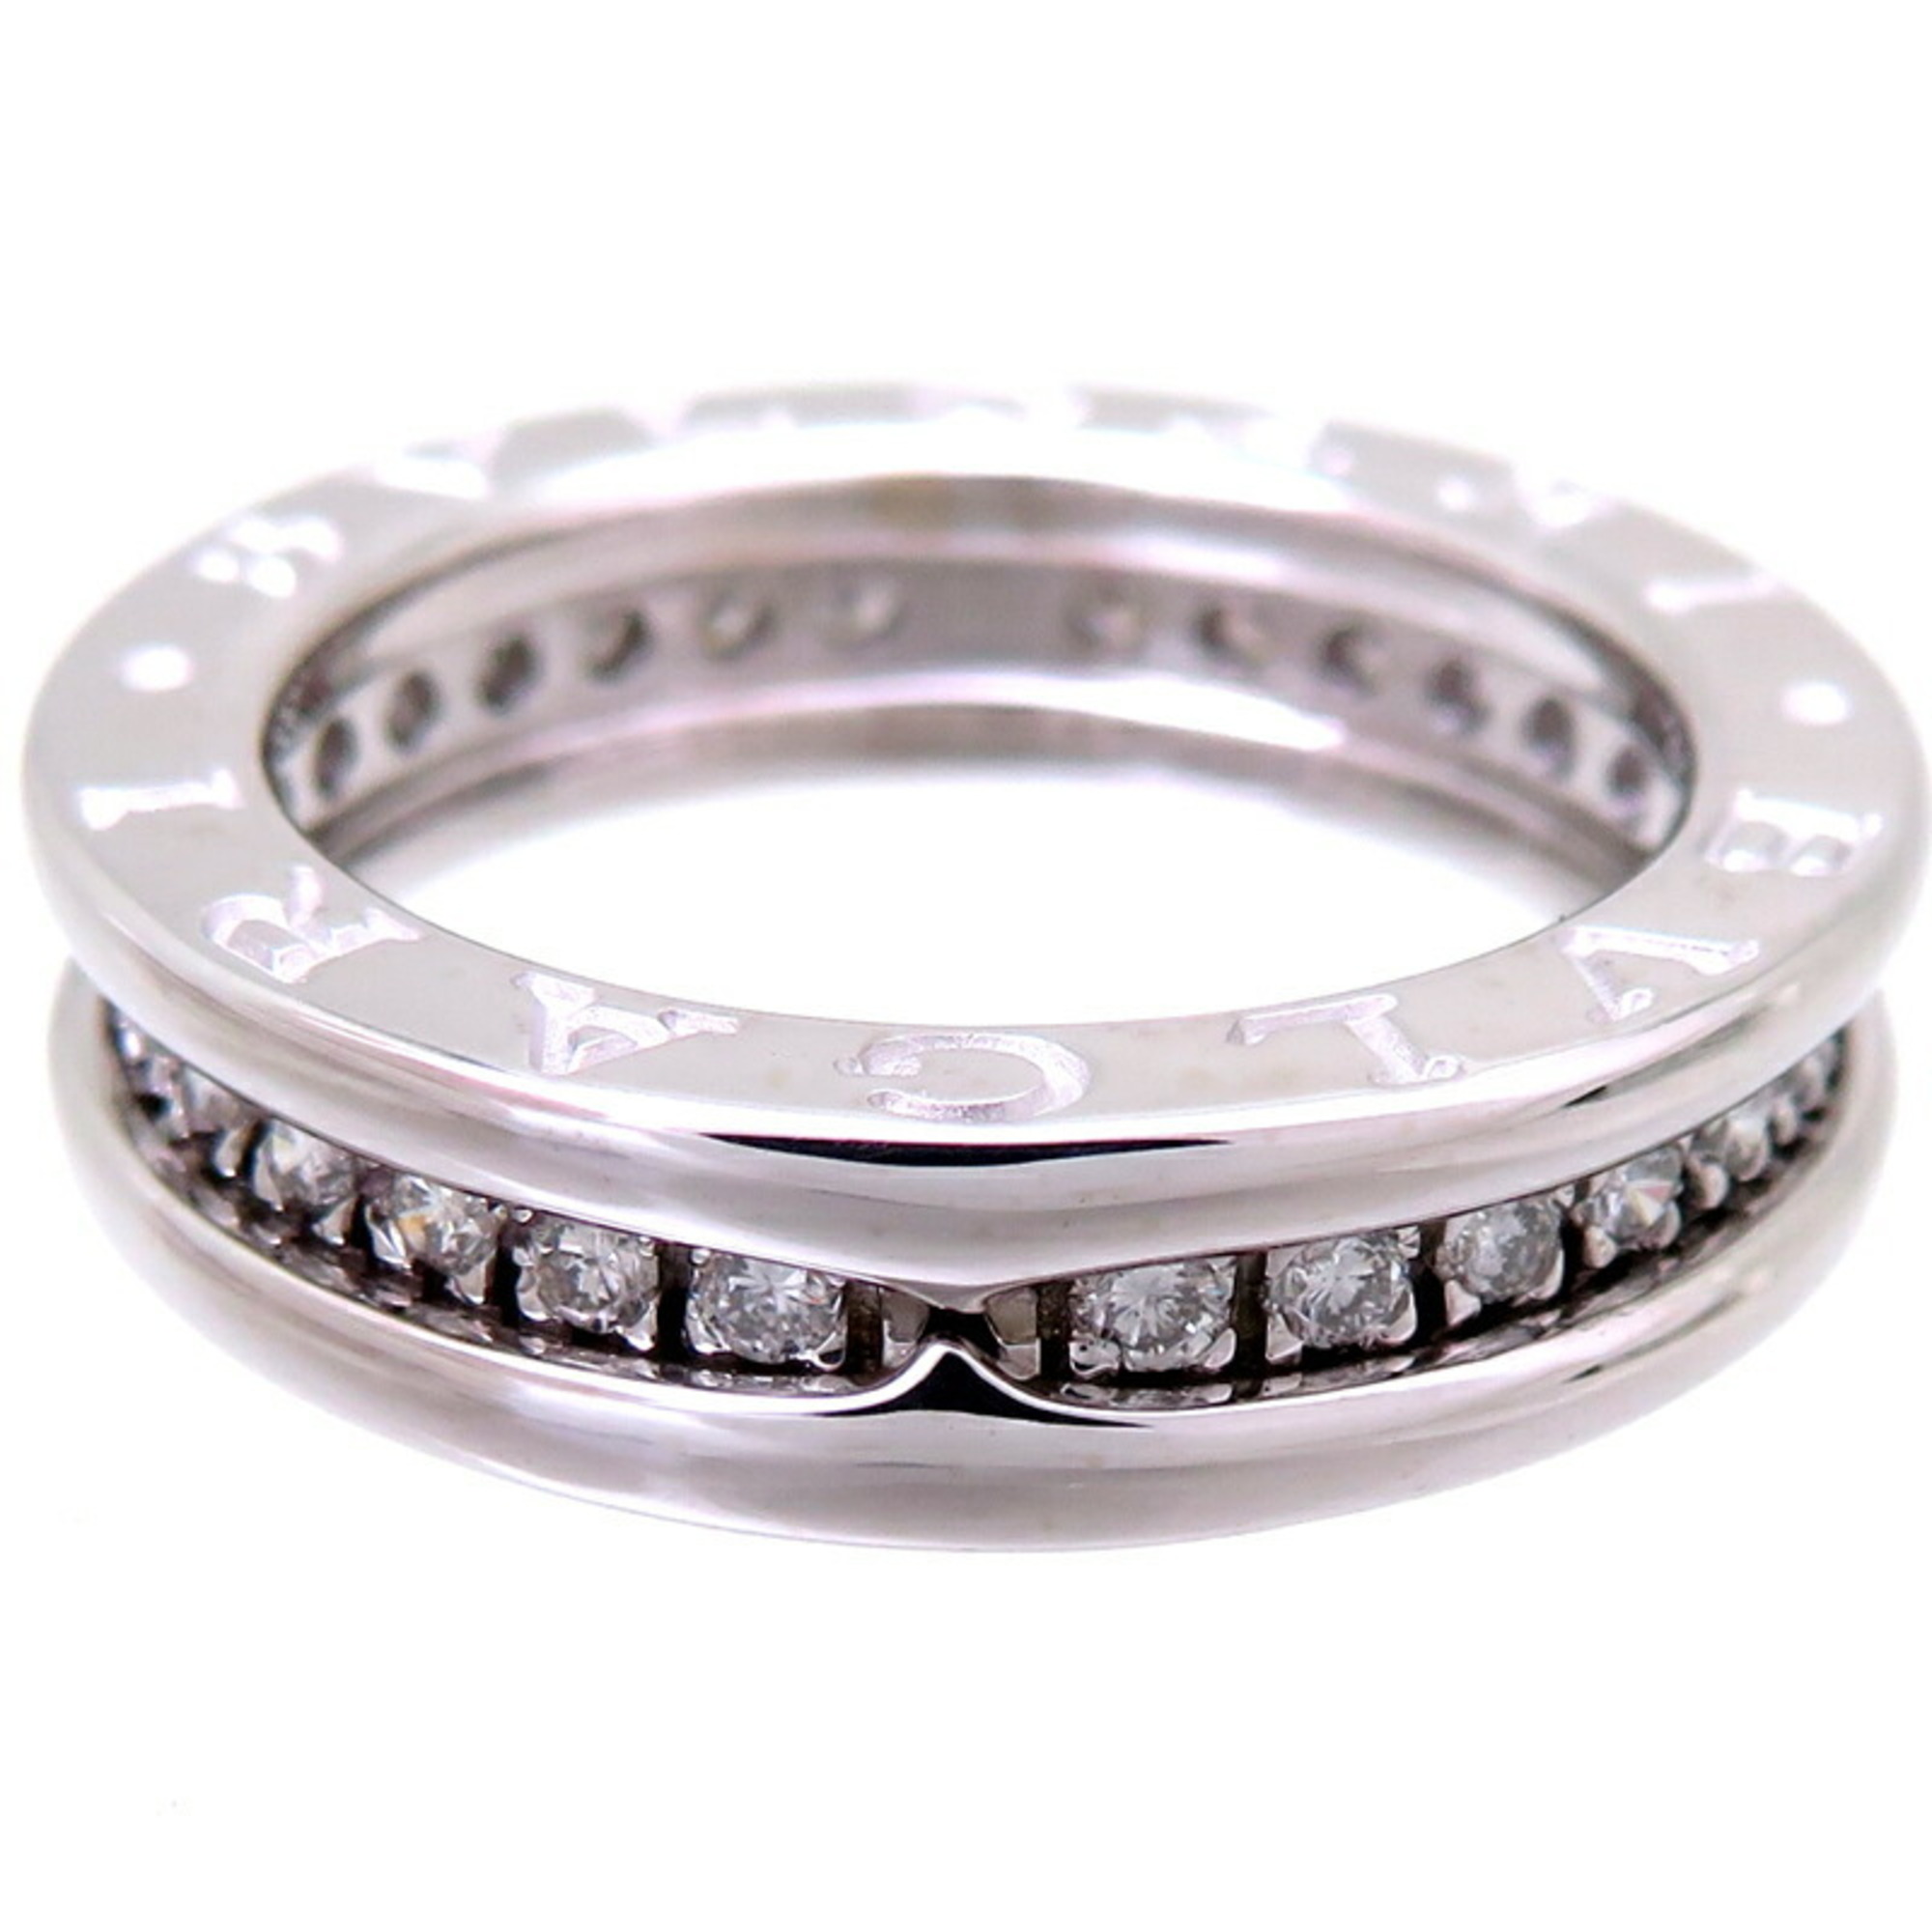 Bvlgari Bulgari #47 B.zero1 1-band diamond ladies ring, 750 white gold, size 7.5